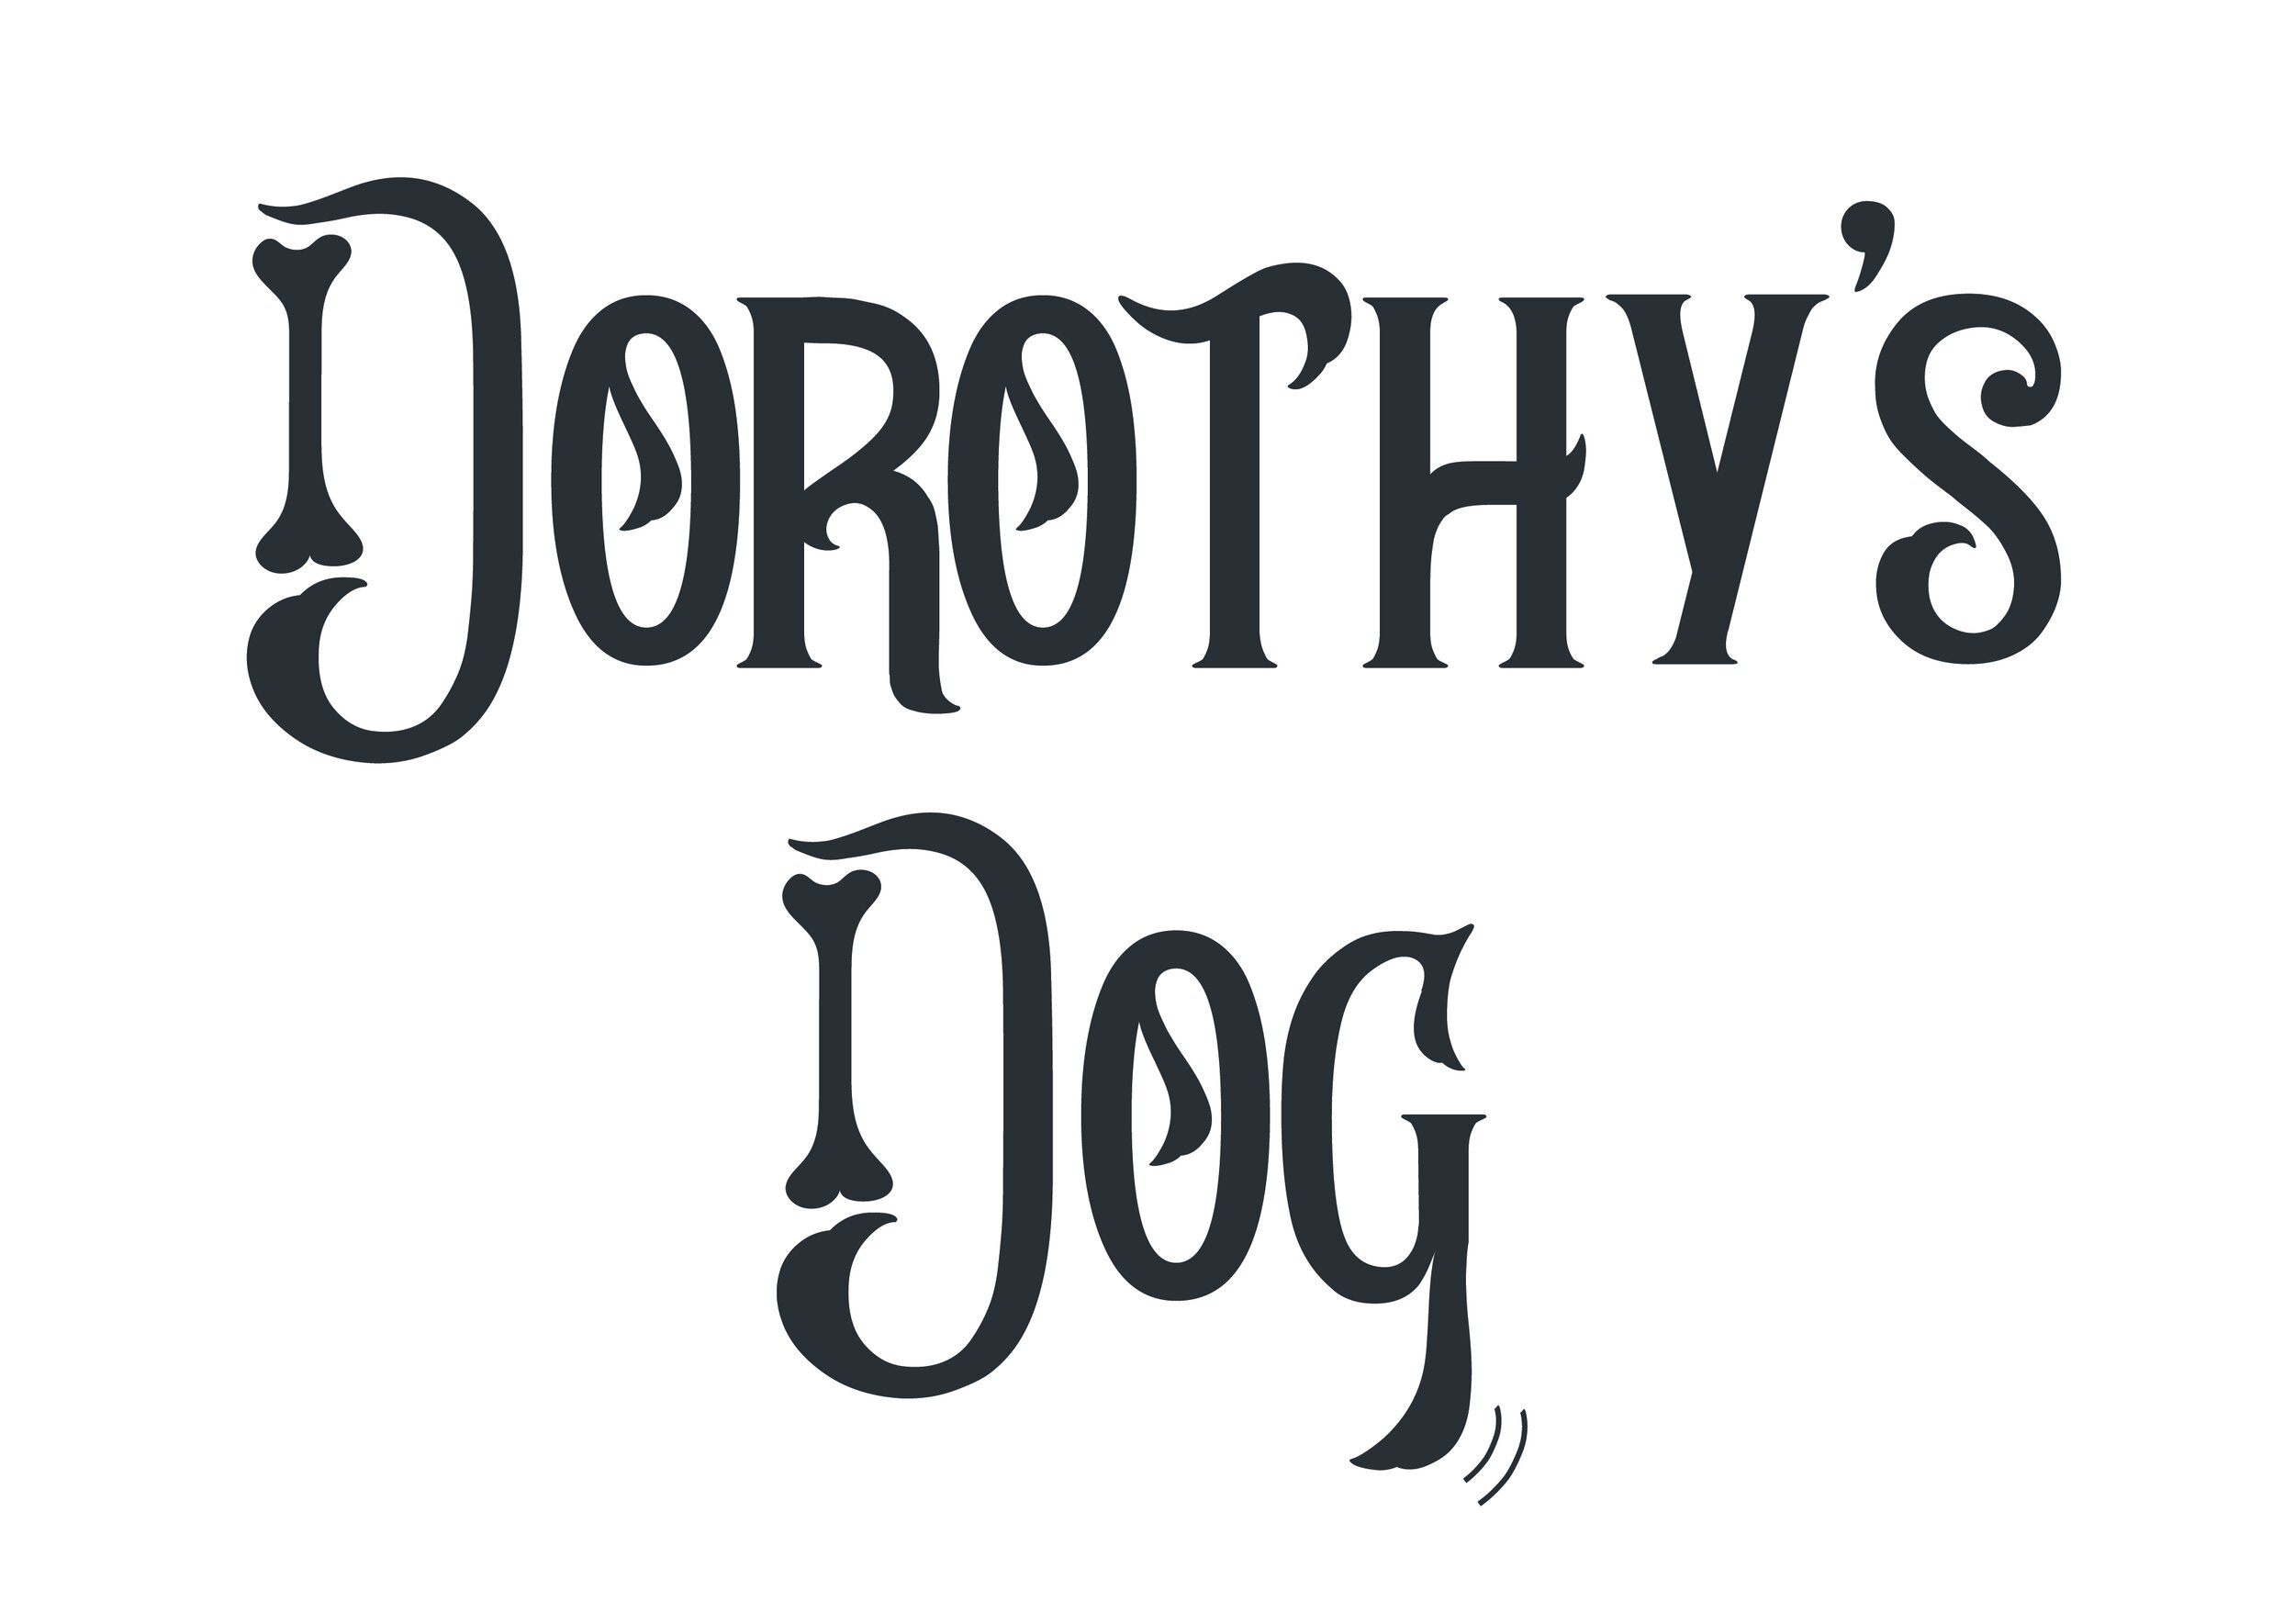 DOROTHY'S DOG FINAL ARTWORK FILES_LOGO BLACK.jpg